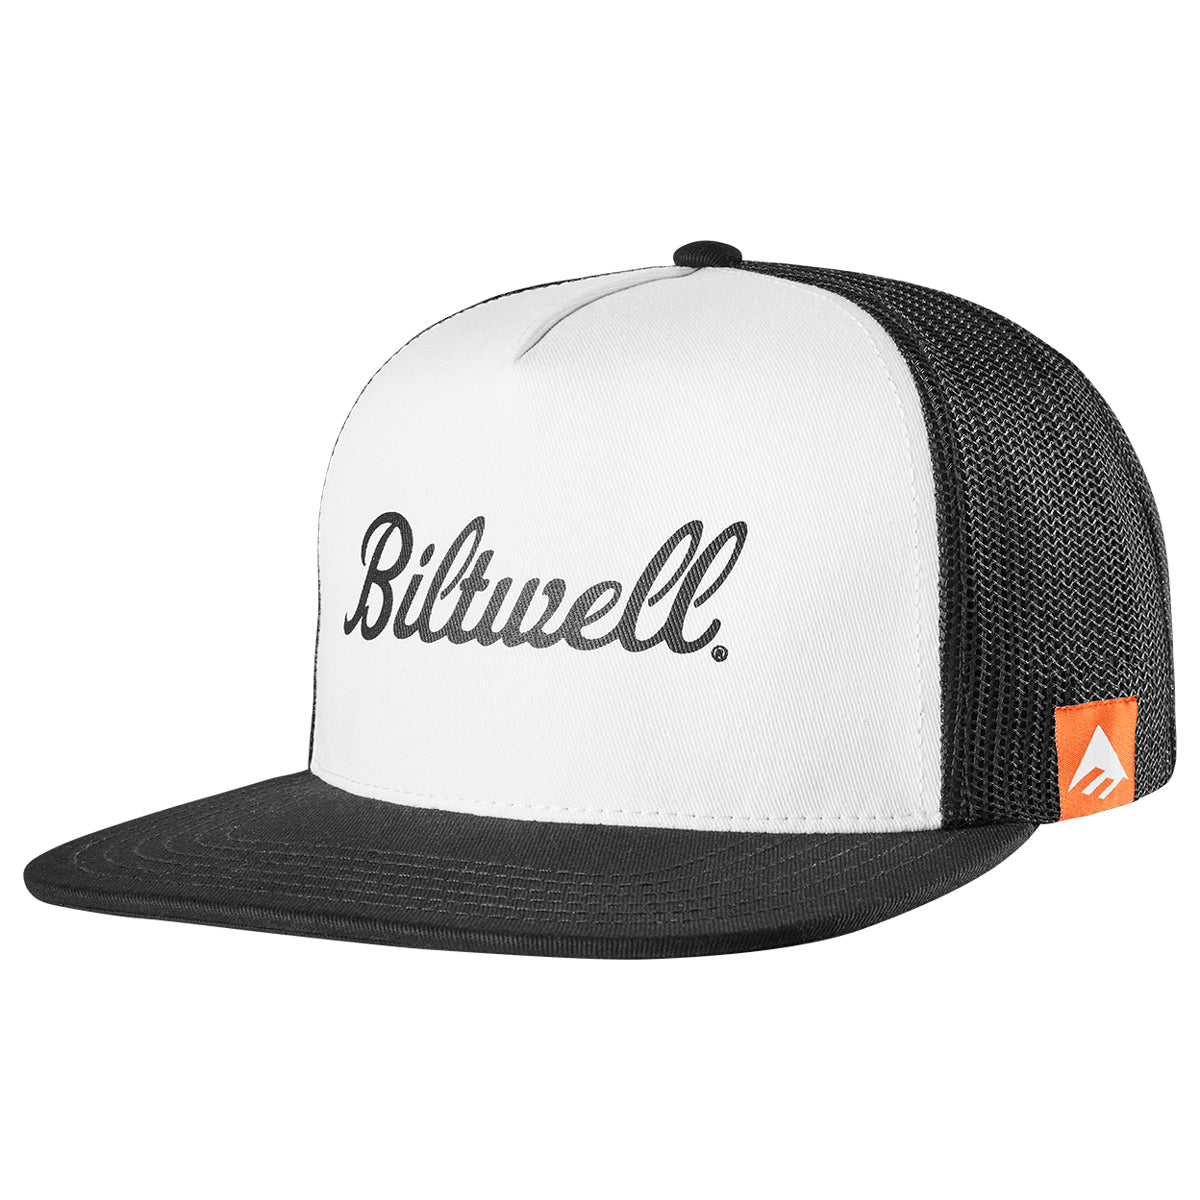 Emerica Biltwell Trucker Snapback Hat - Black image 1